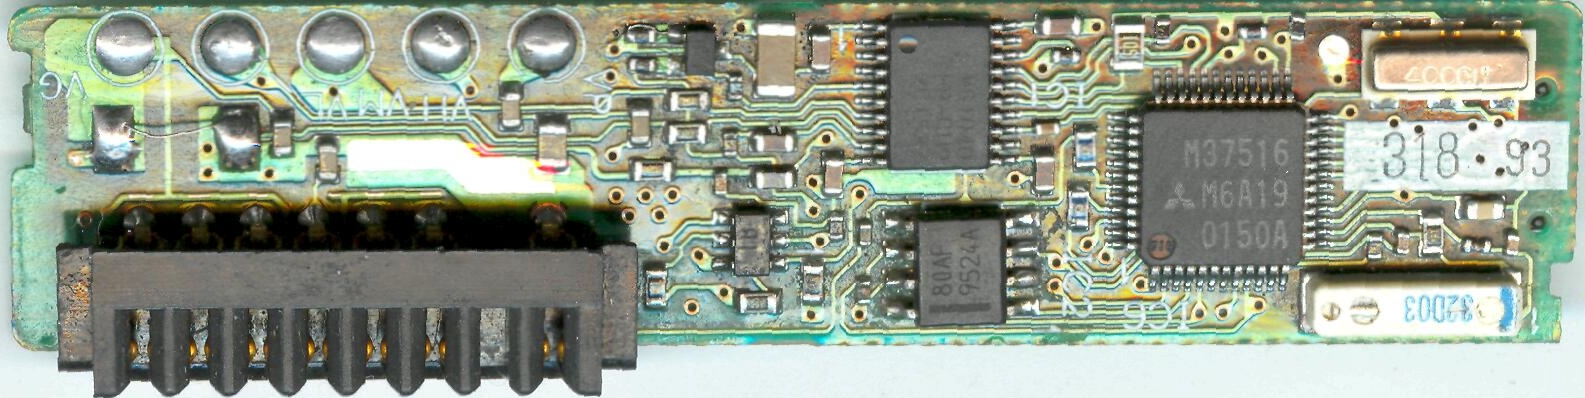 Можно ли производить ремонт батареи ноутбука своими руками?